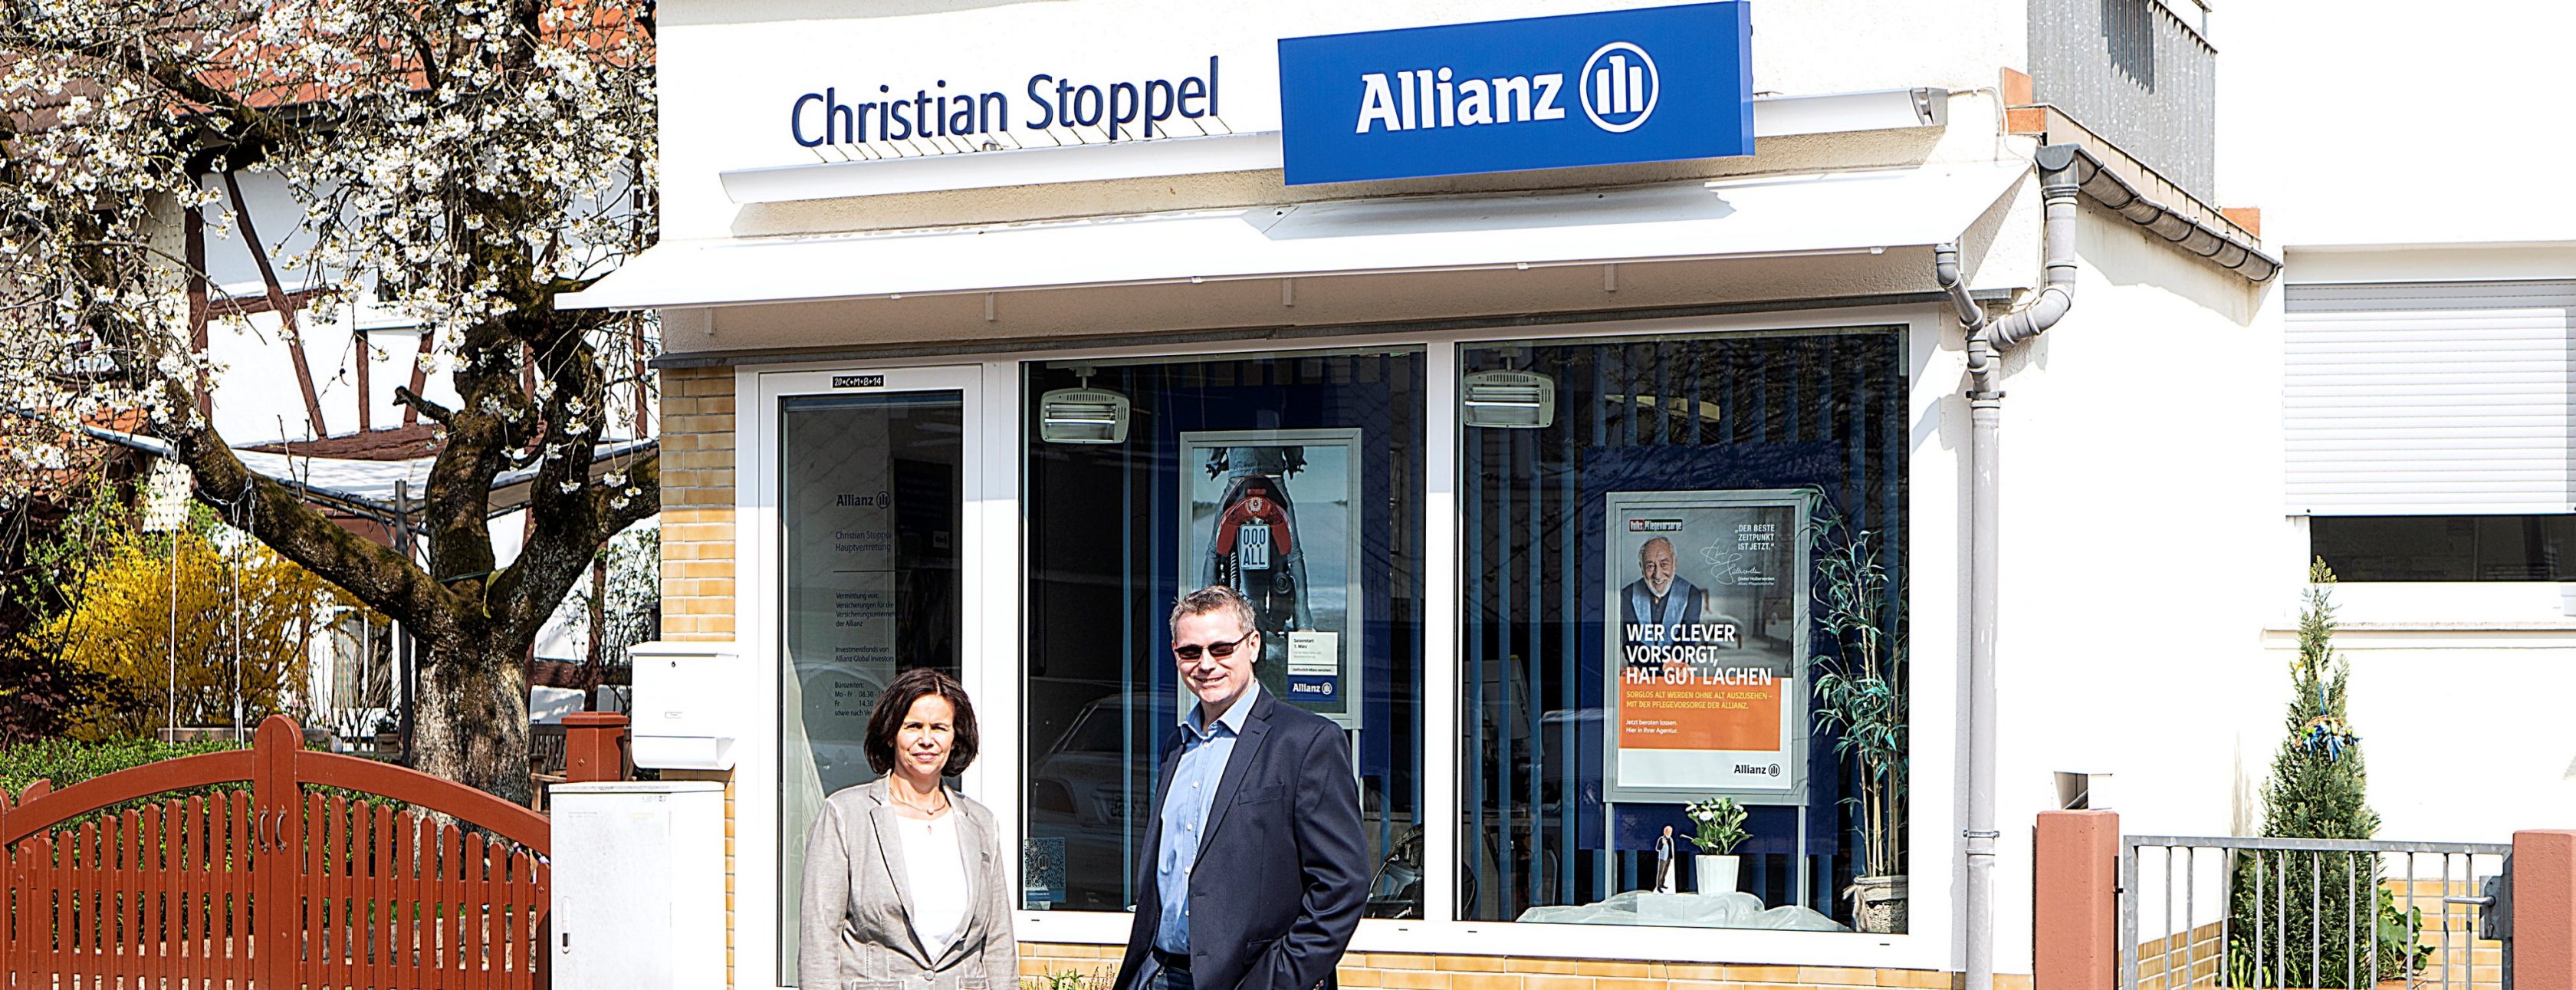 Allianz Versicherung Christian Stoppel Bad Soden-Salmünster - Titelbild